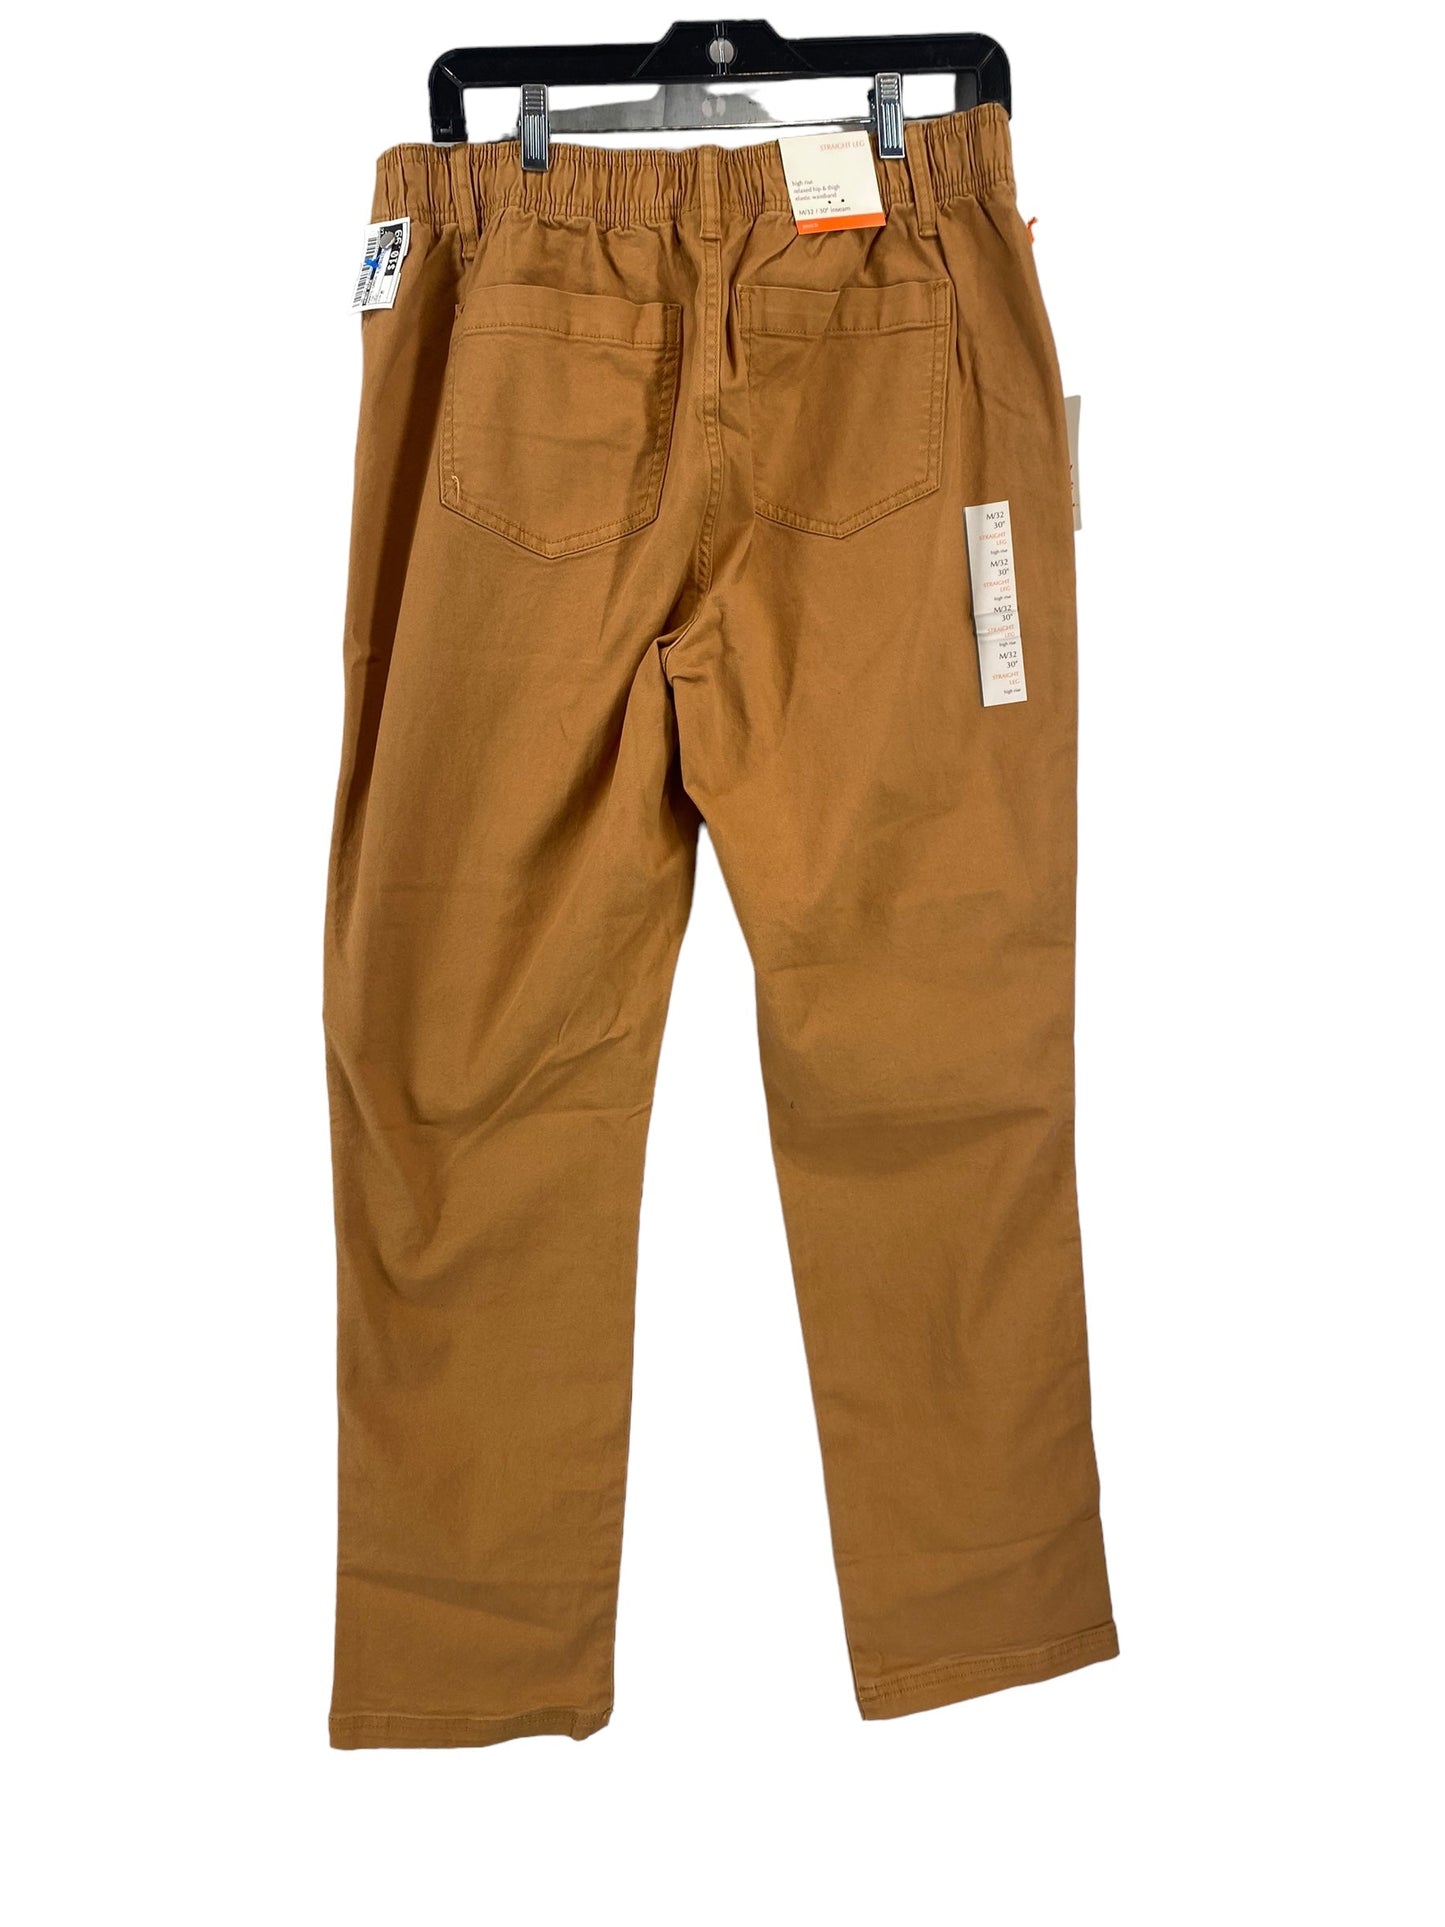 Tan Pants Cargo & Utility Knox Rose, Size M